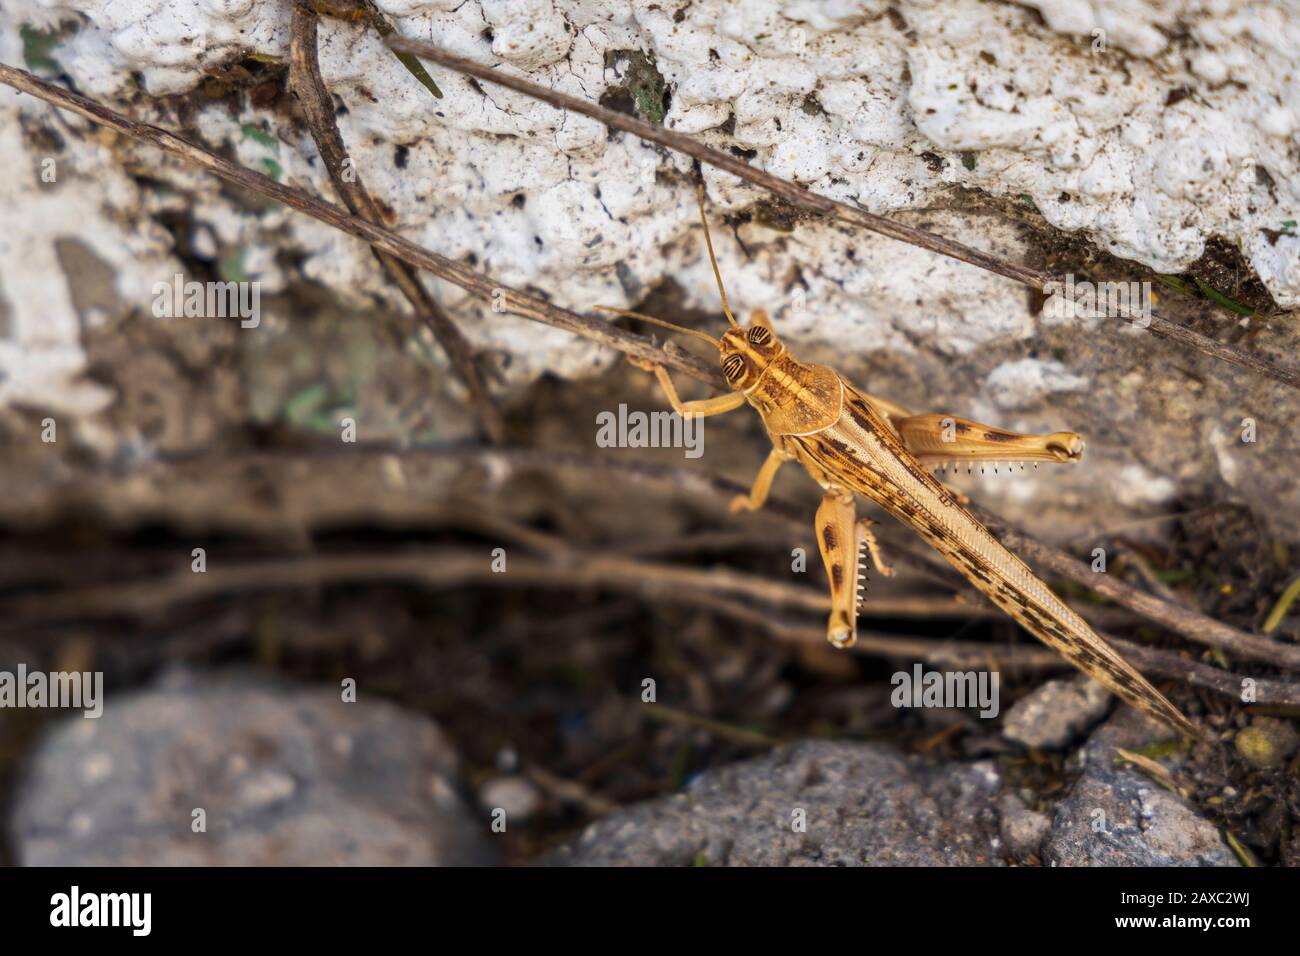 Acantacris de langostas, Acrididae, insecto saltamontes en Guia de Isora, Tenerife, Islas Canarias, España Foto de stock